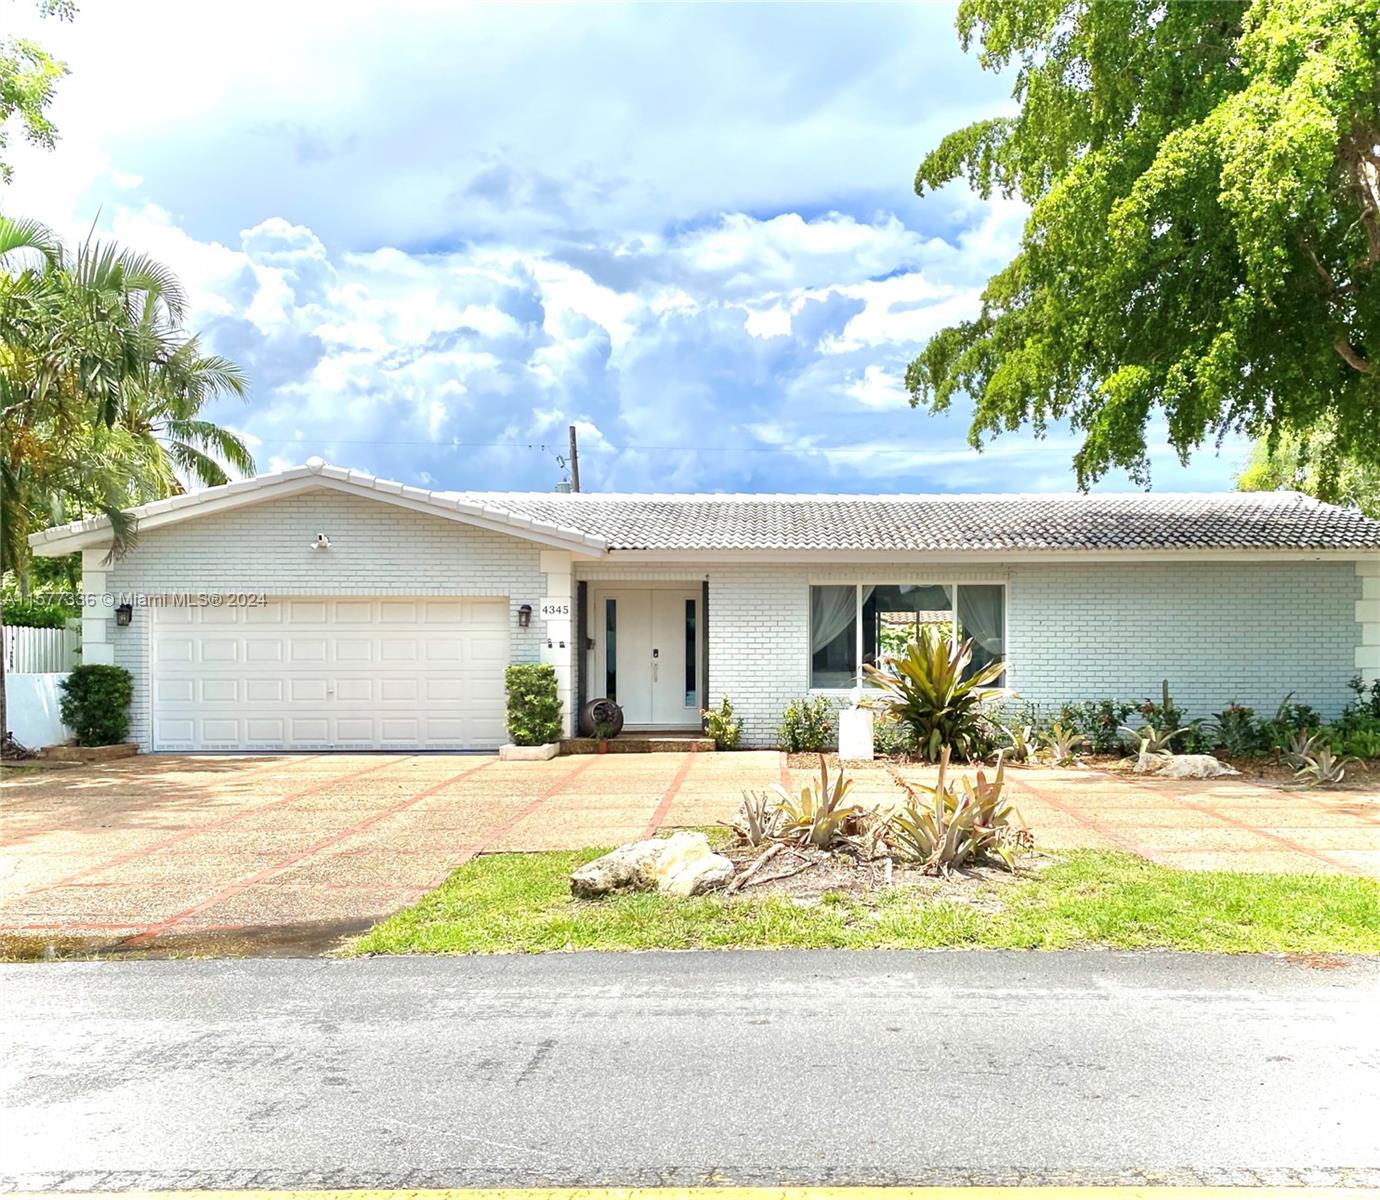 Rental Property at 4345 Ne 22nd Ave, Fort Lauderdale, Broward County, Florida - Bedrooms: 4 
Bathrooms: 2  - $9,500 MO.